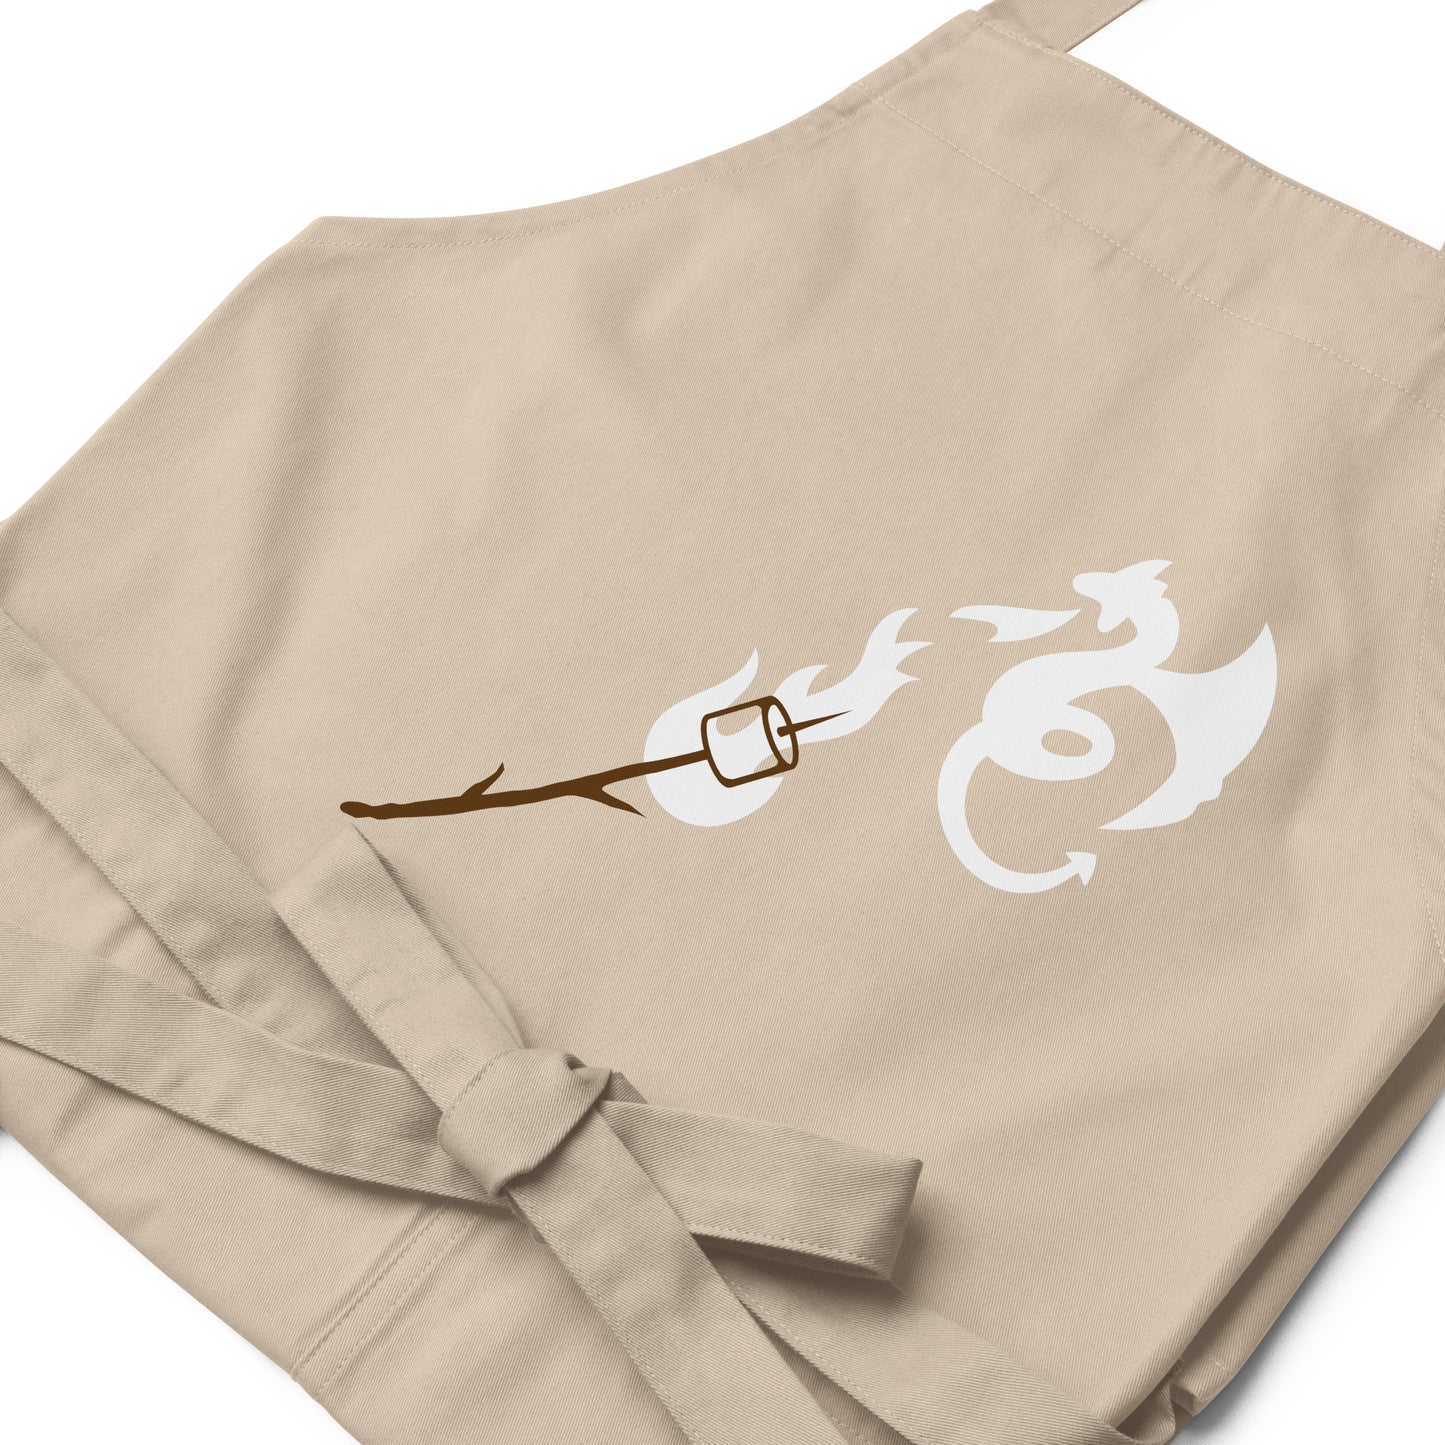 Dragon Campfire Organic cotton apron